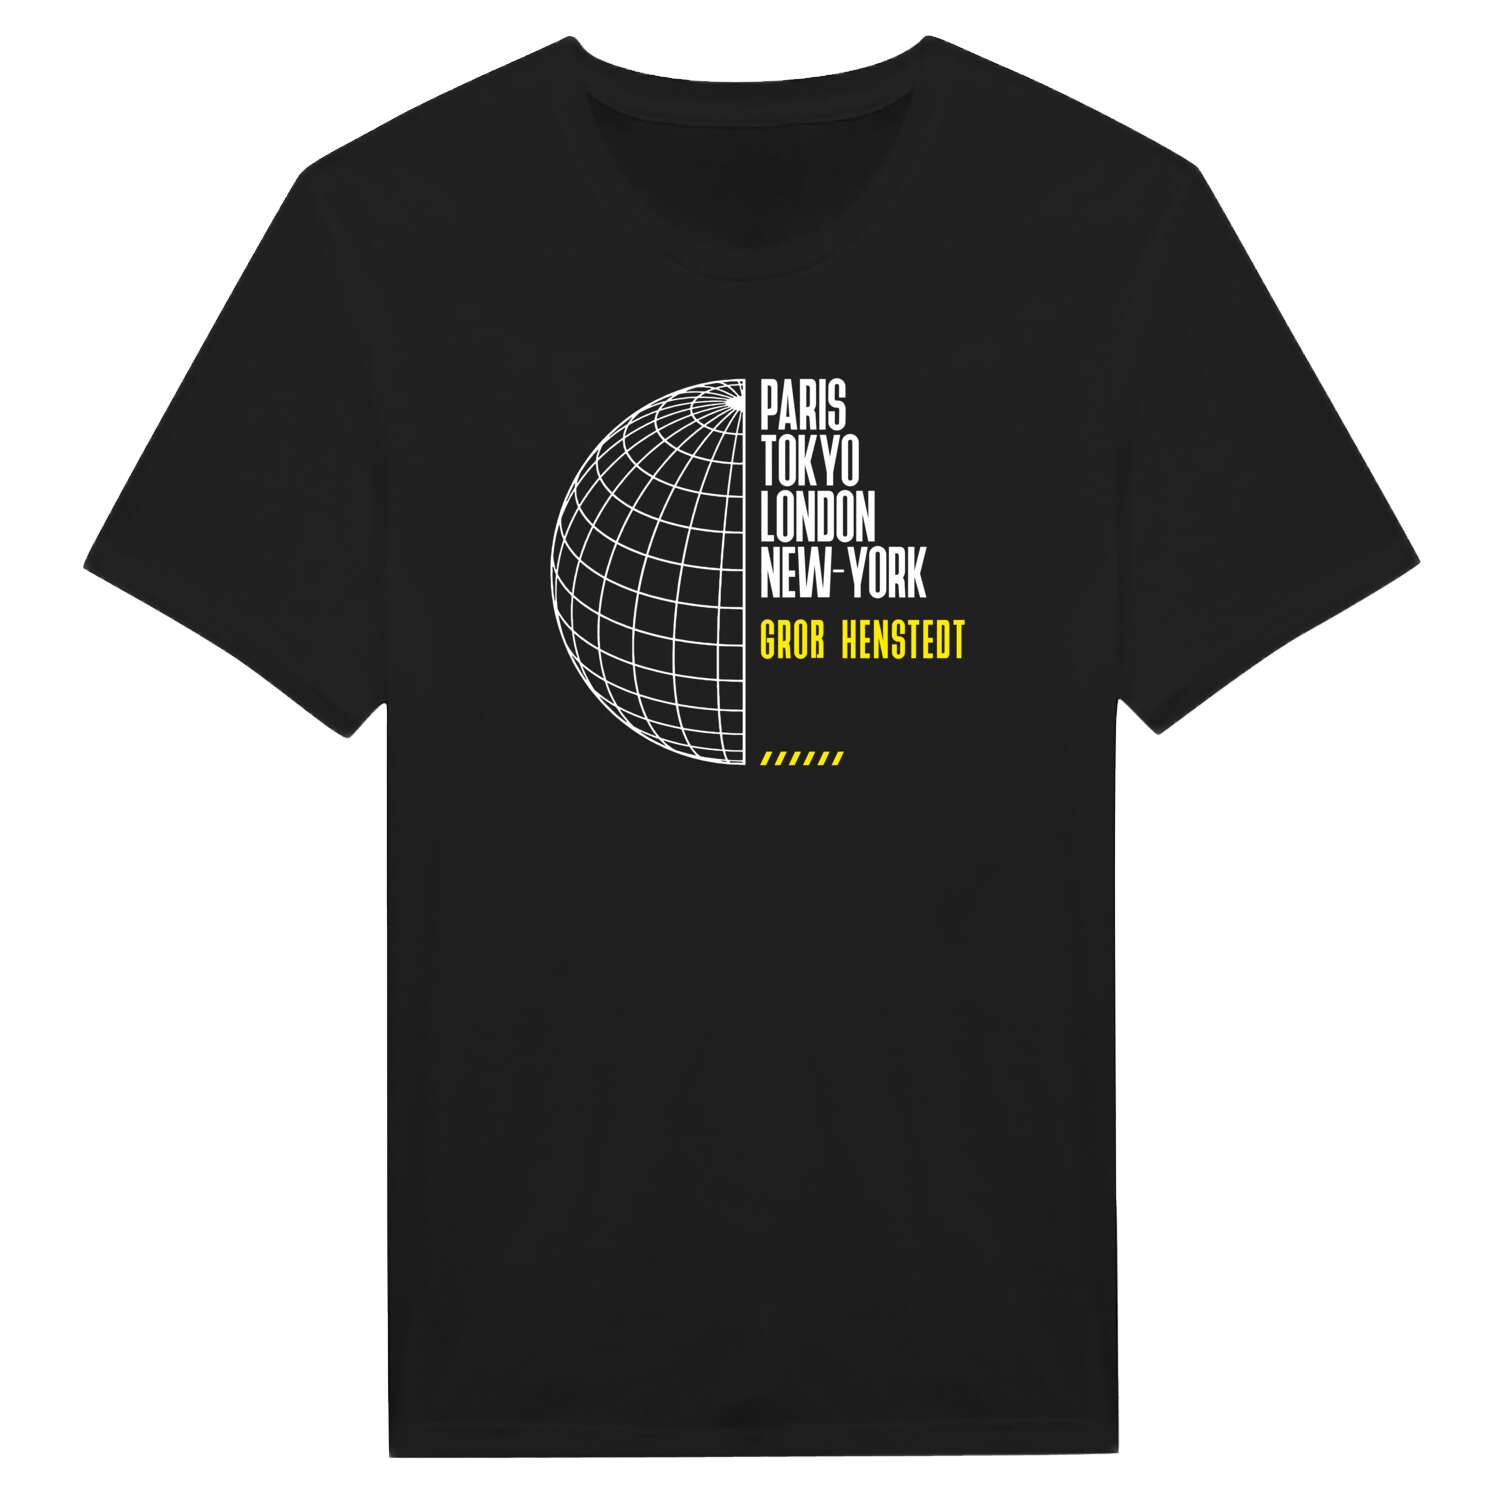 Groß Henstedt T-Shirt »Paris Tokyo London«